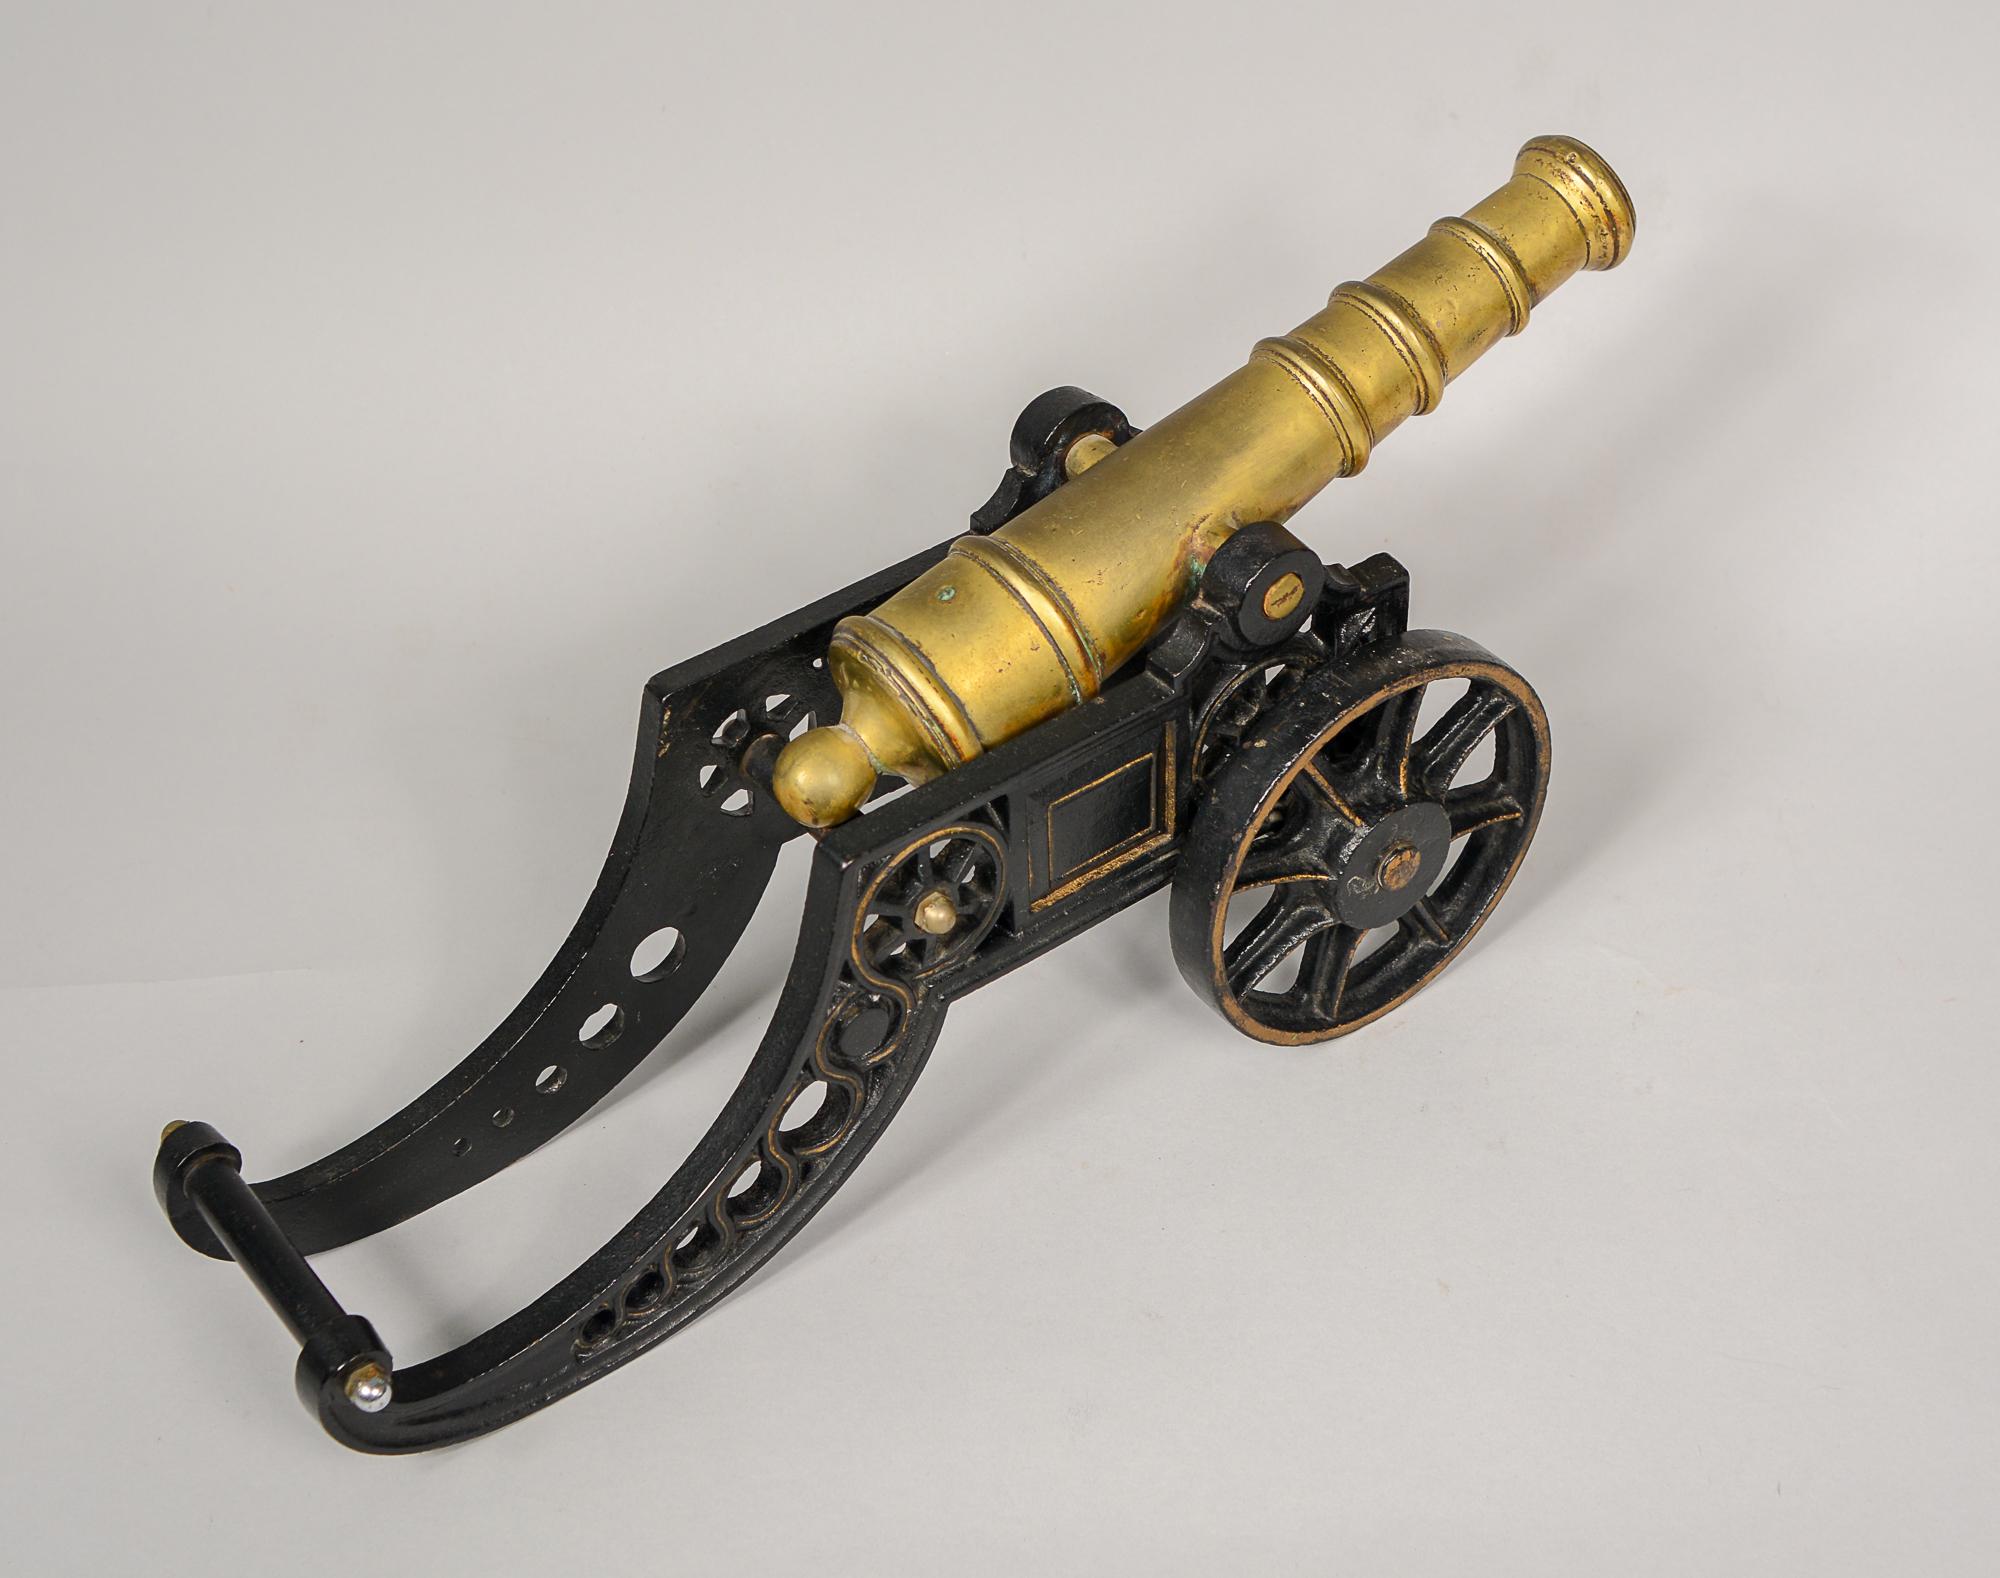 American Ornate Desk Model Signal Cannon in Bronze and Iron For Sale